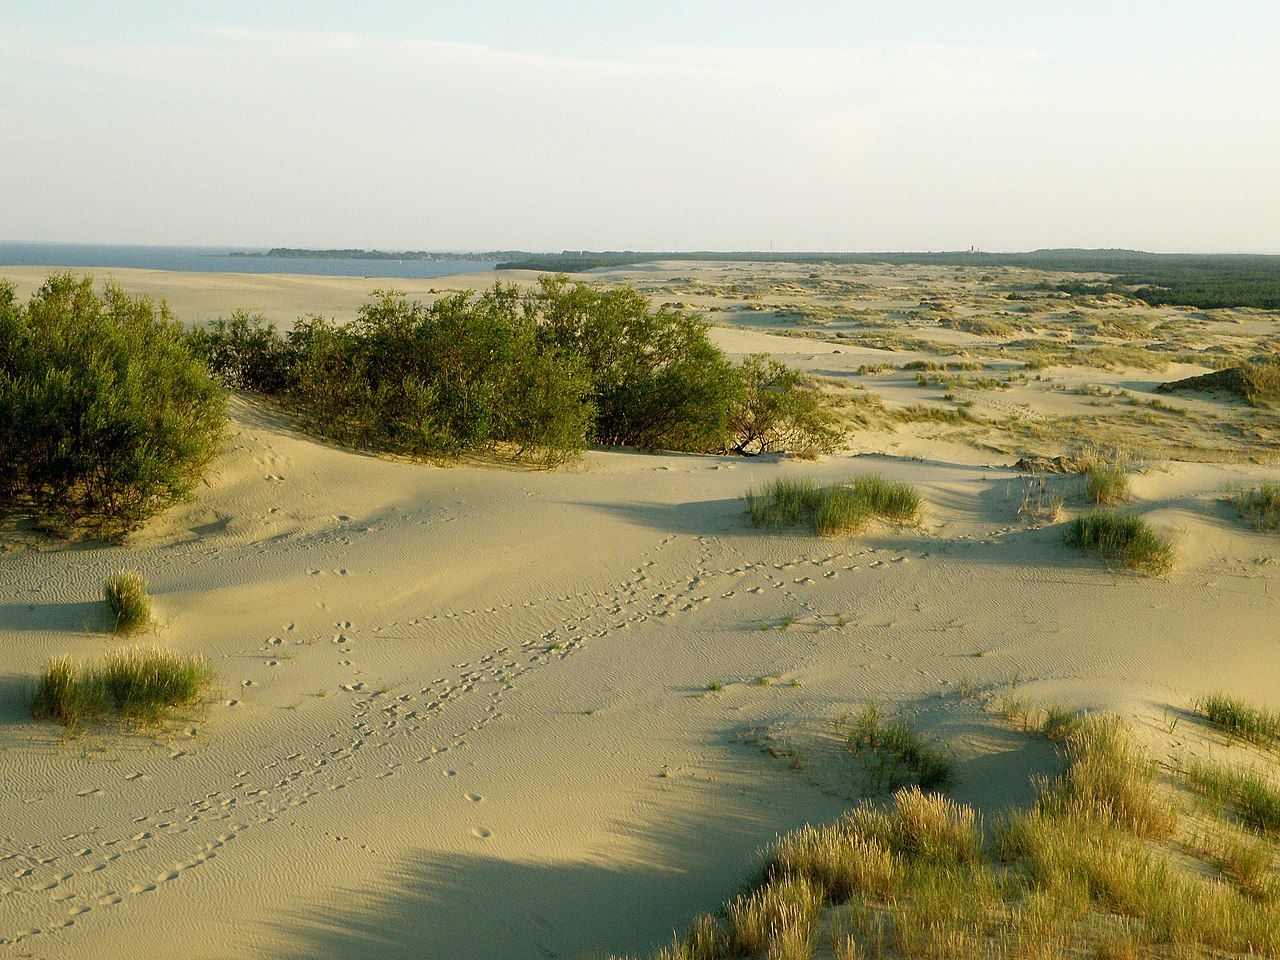 A wide shot of footprints crisscrossing some dunes.